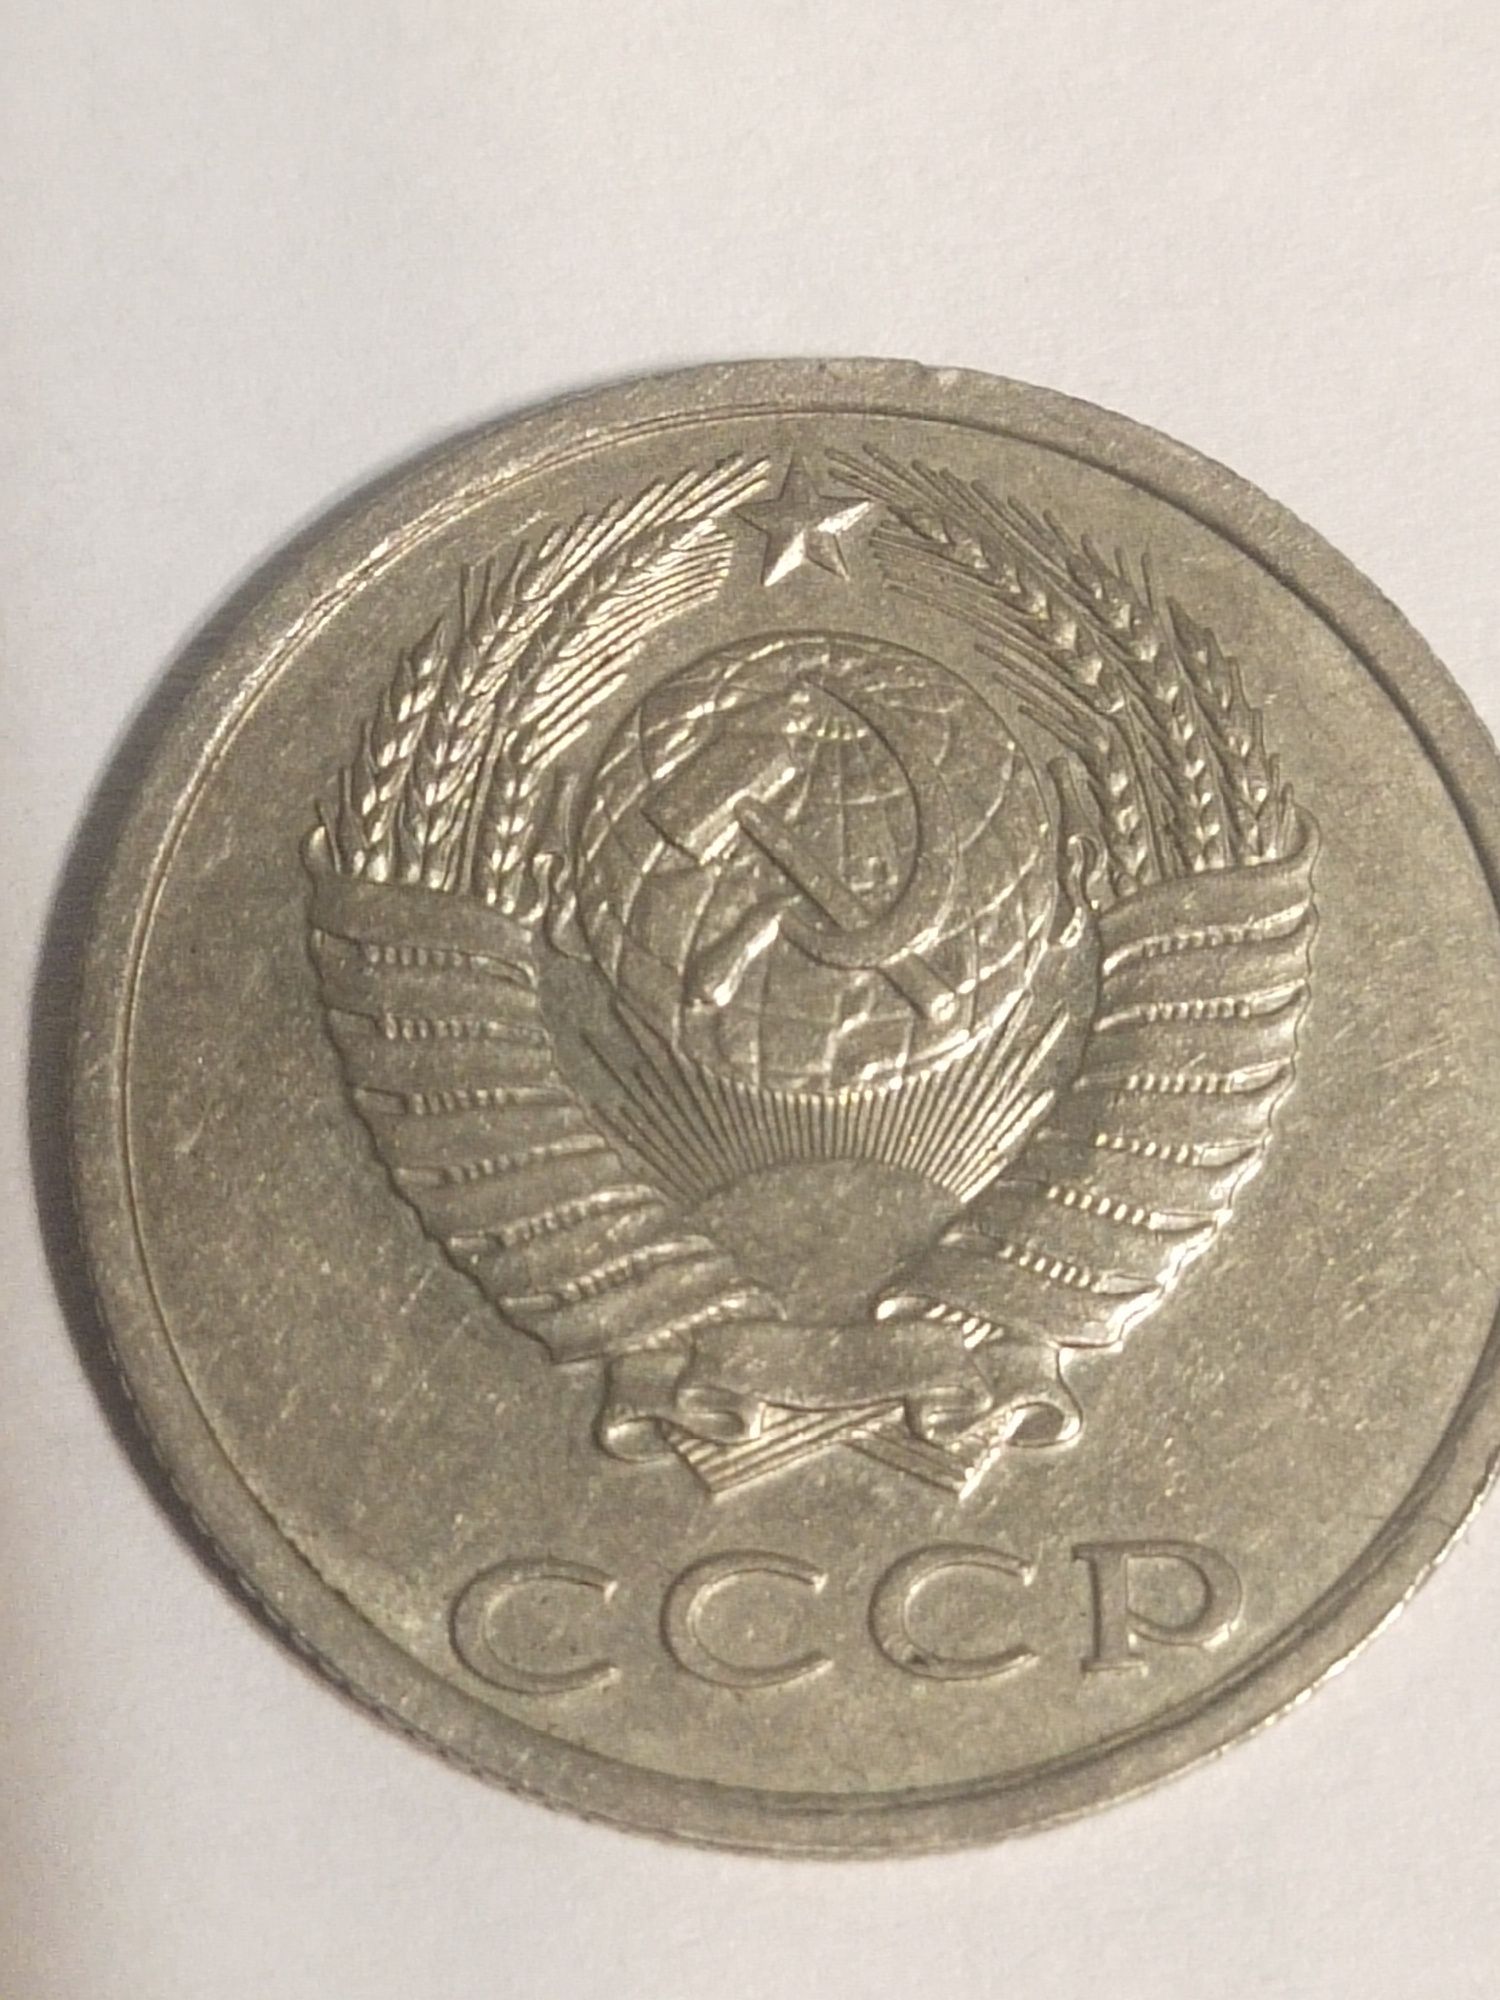 20 коп 1991 год без монетного двора